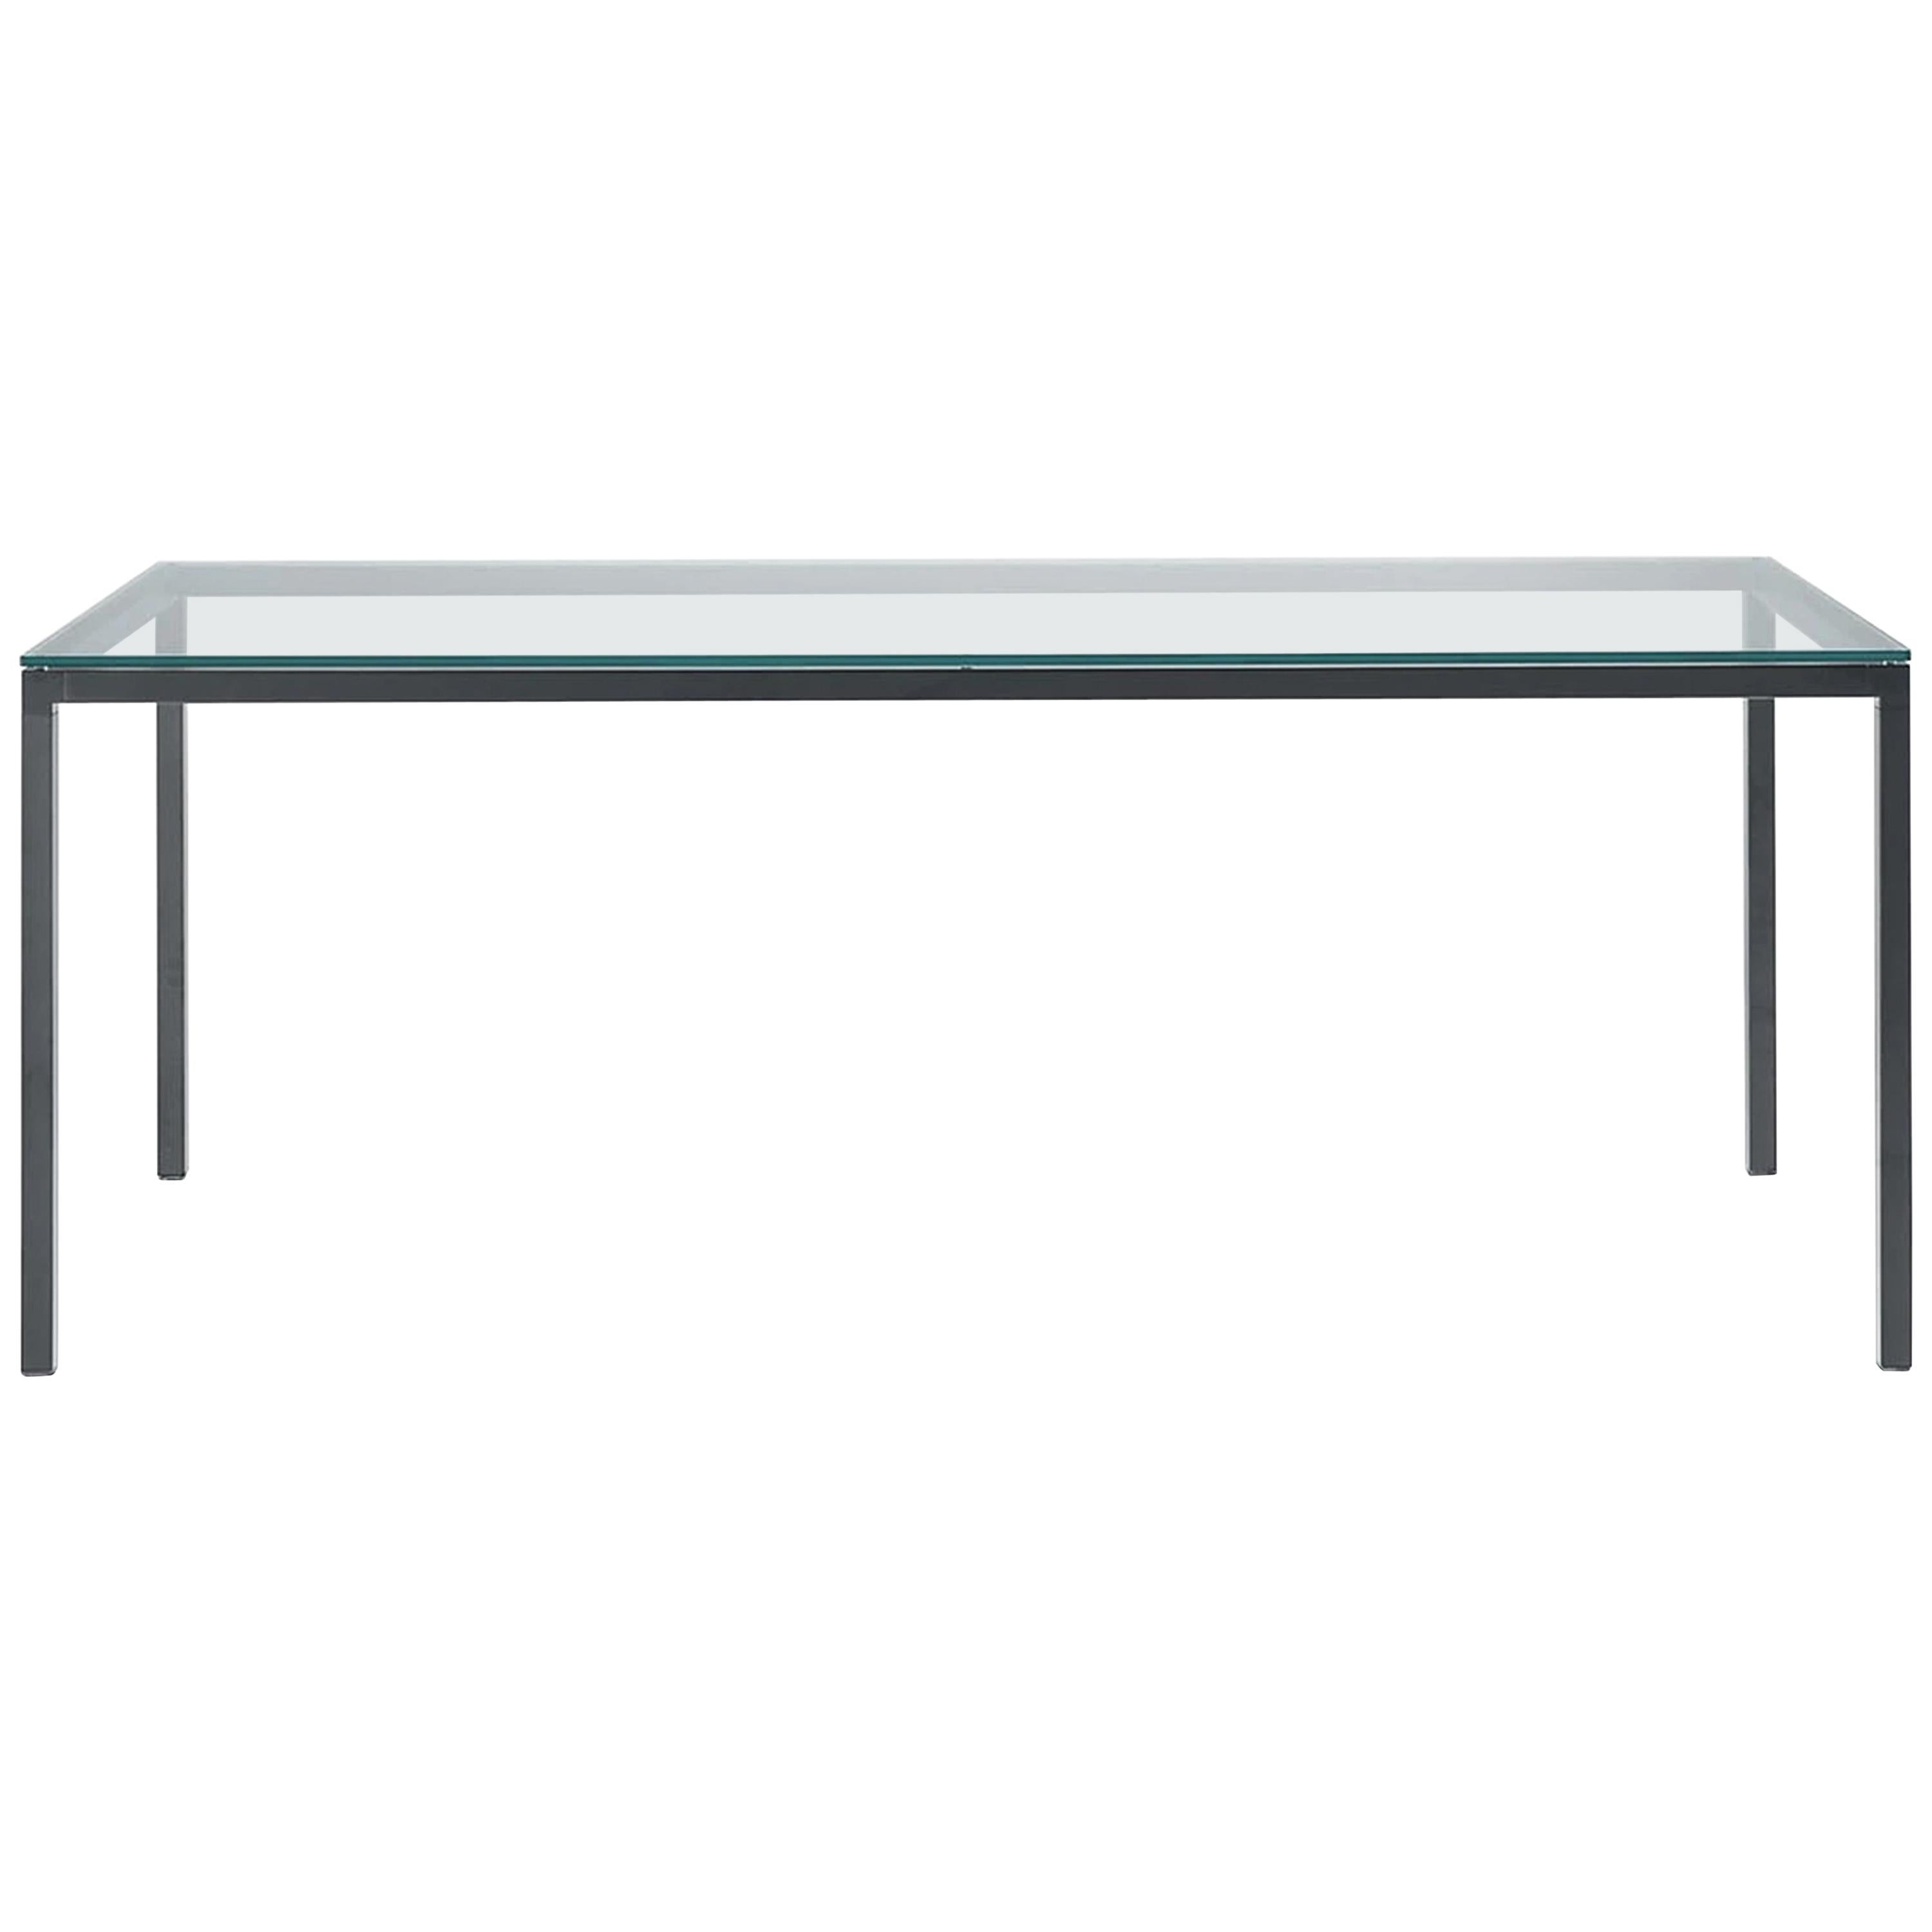 Customizable Desalto Helsinki 35 Home Glass Top Table by Caronni and Bonanomi For Sale